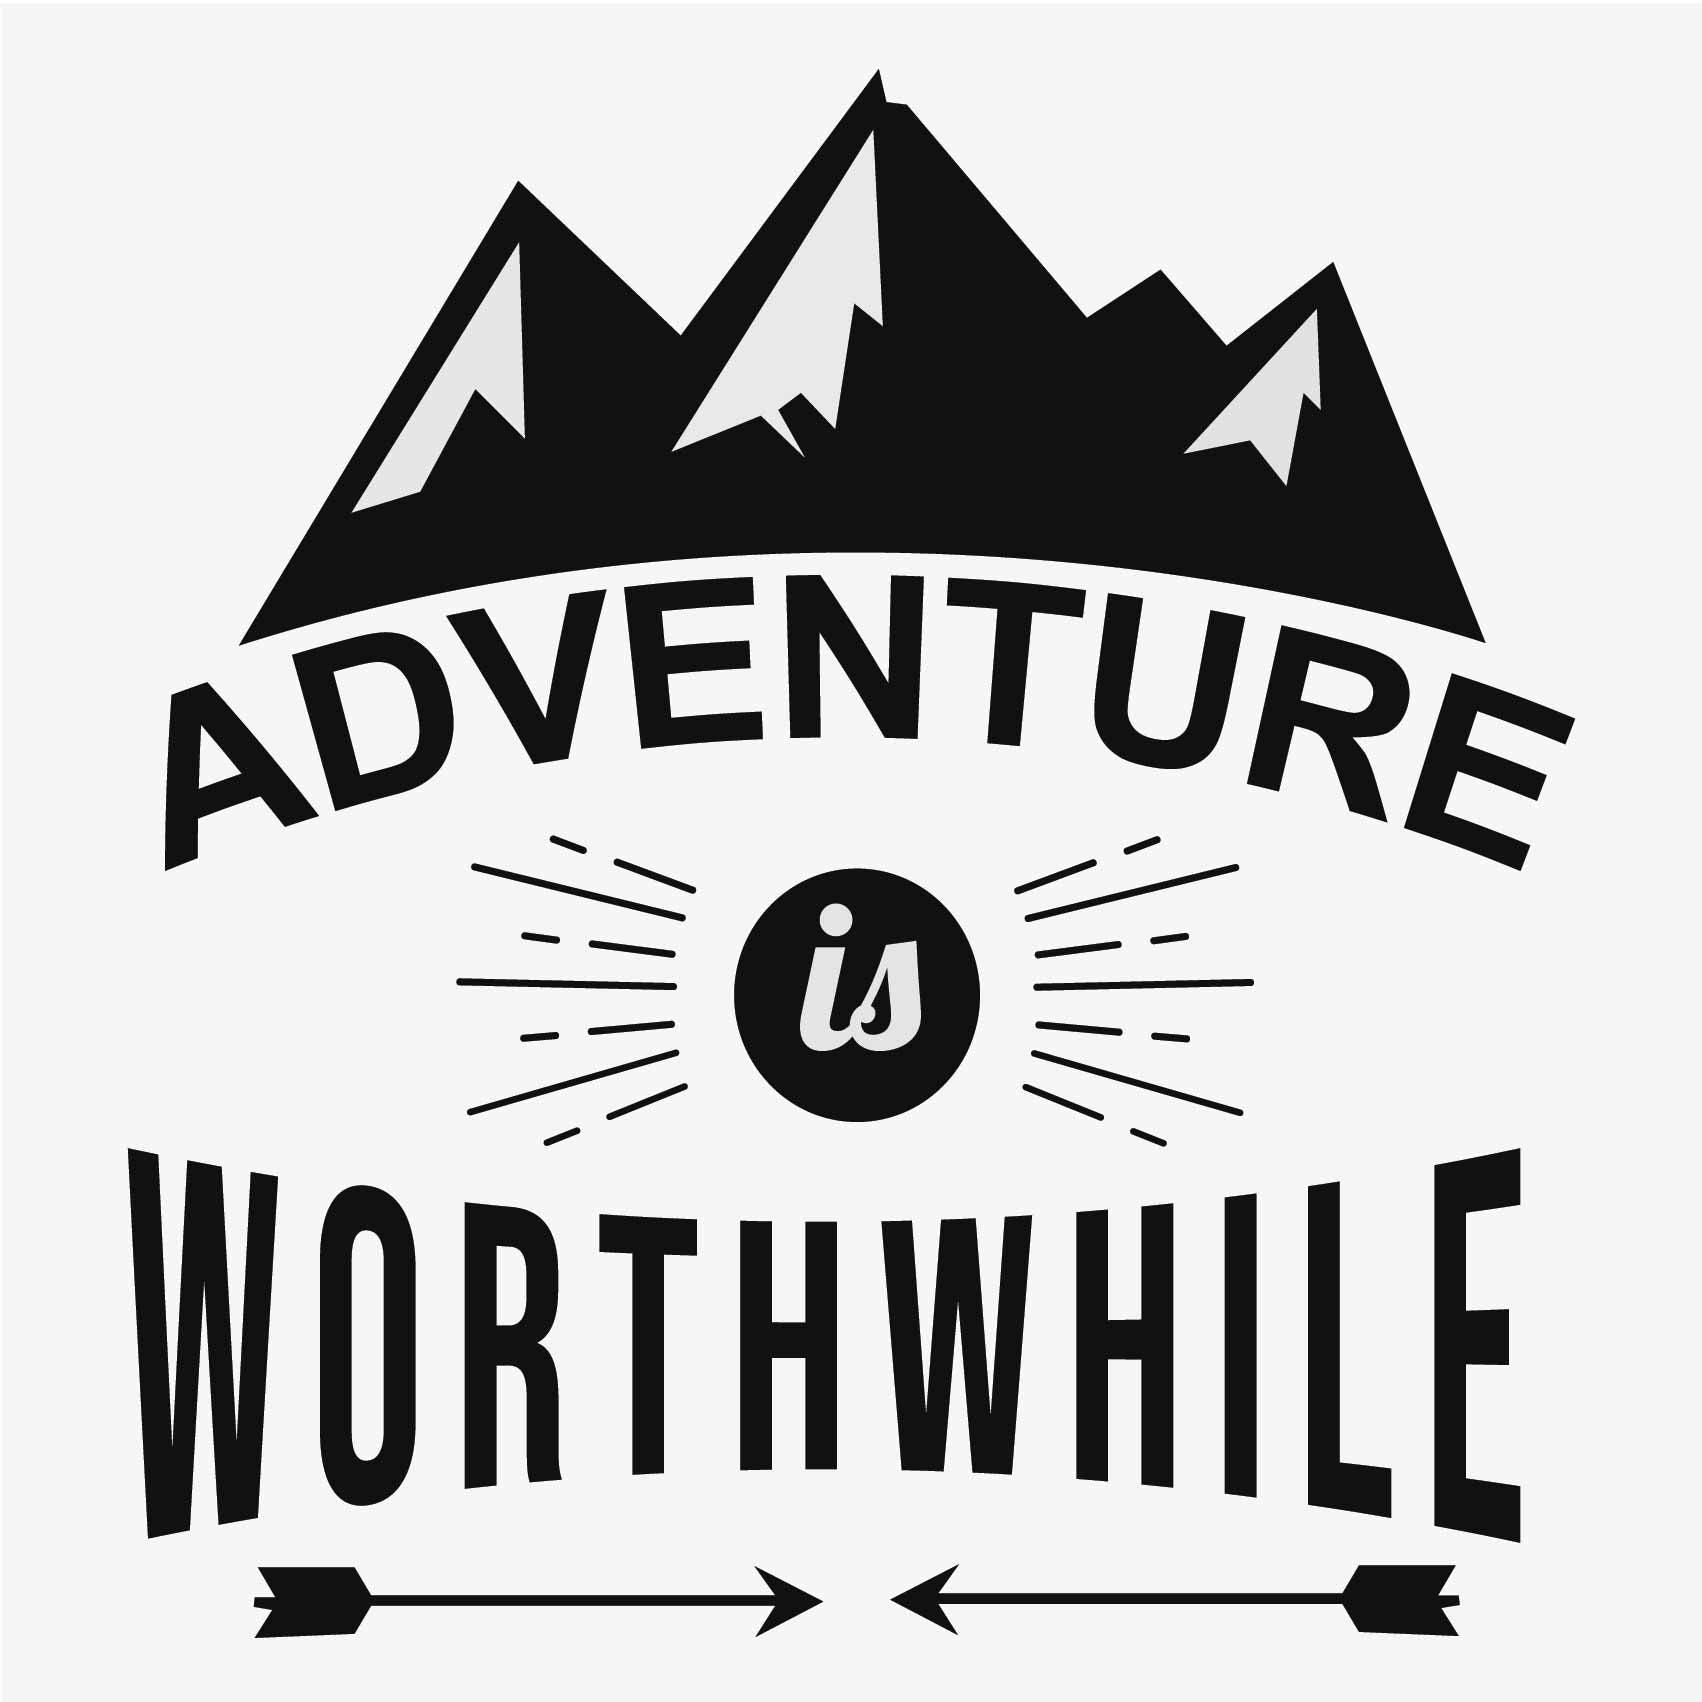 Adventure Is Worthwhile Reactr Tshirts For Men - Eyewearlabs